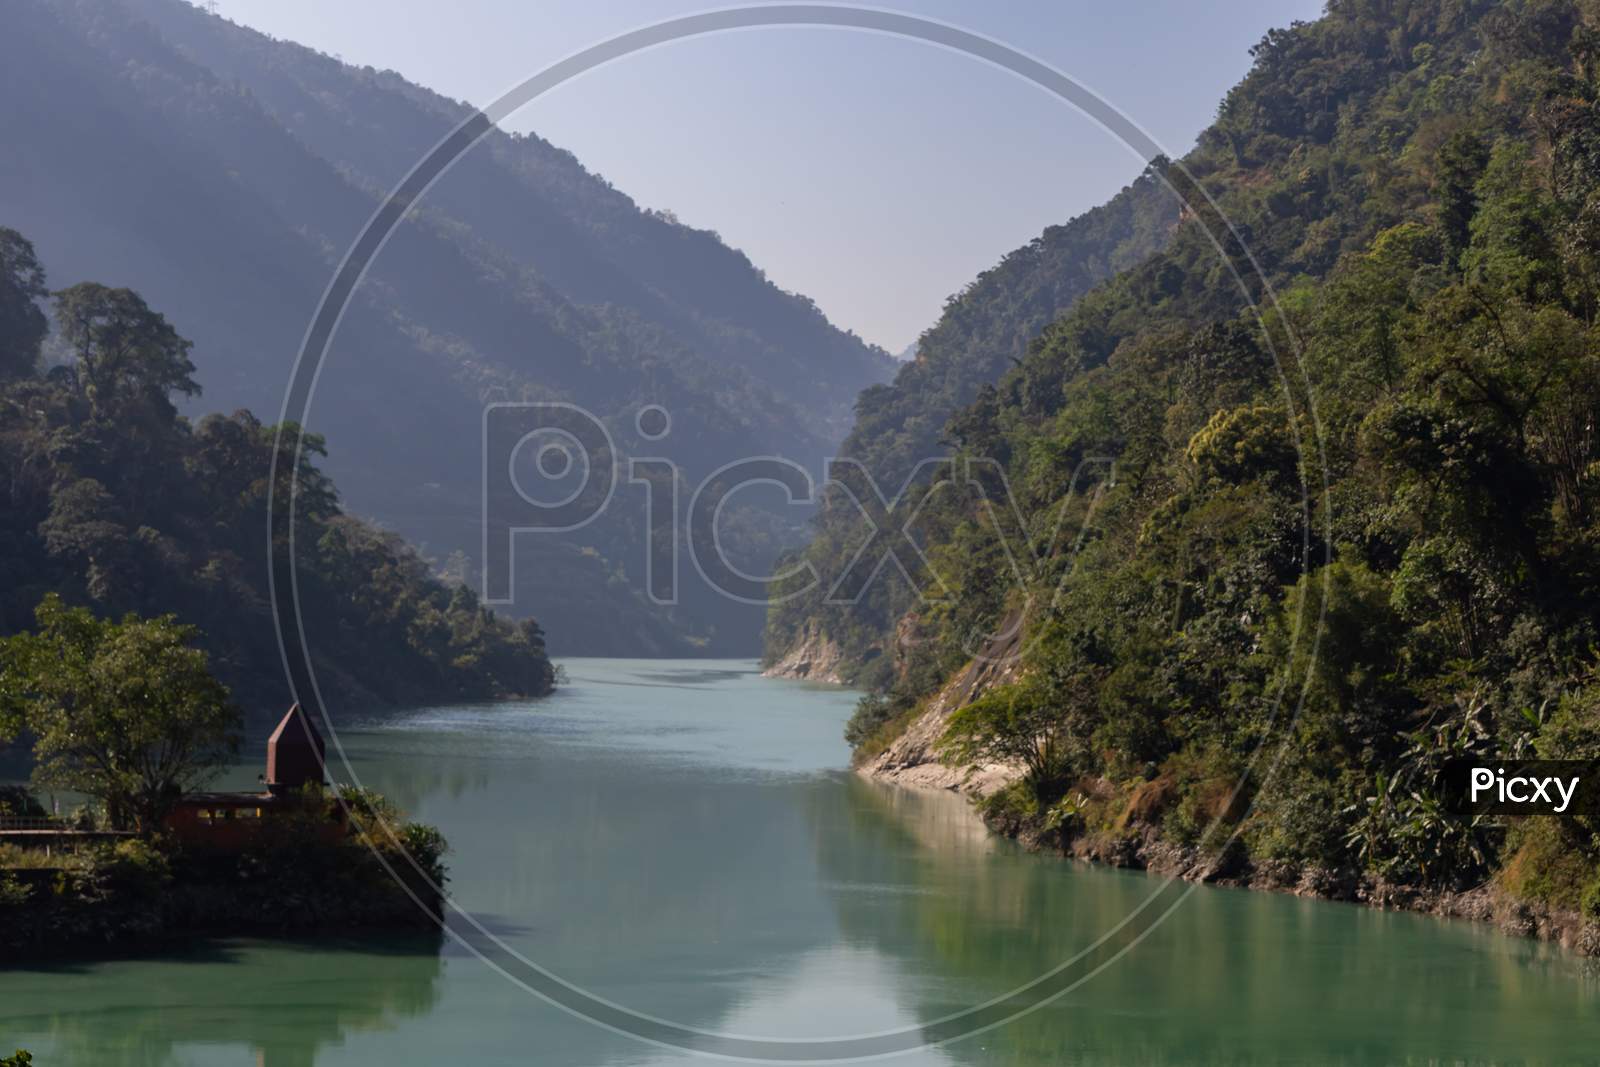 Teesta river flowing down from Sikkim to Darjeeling district